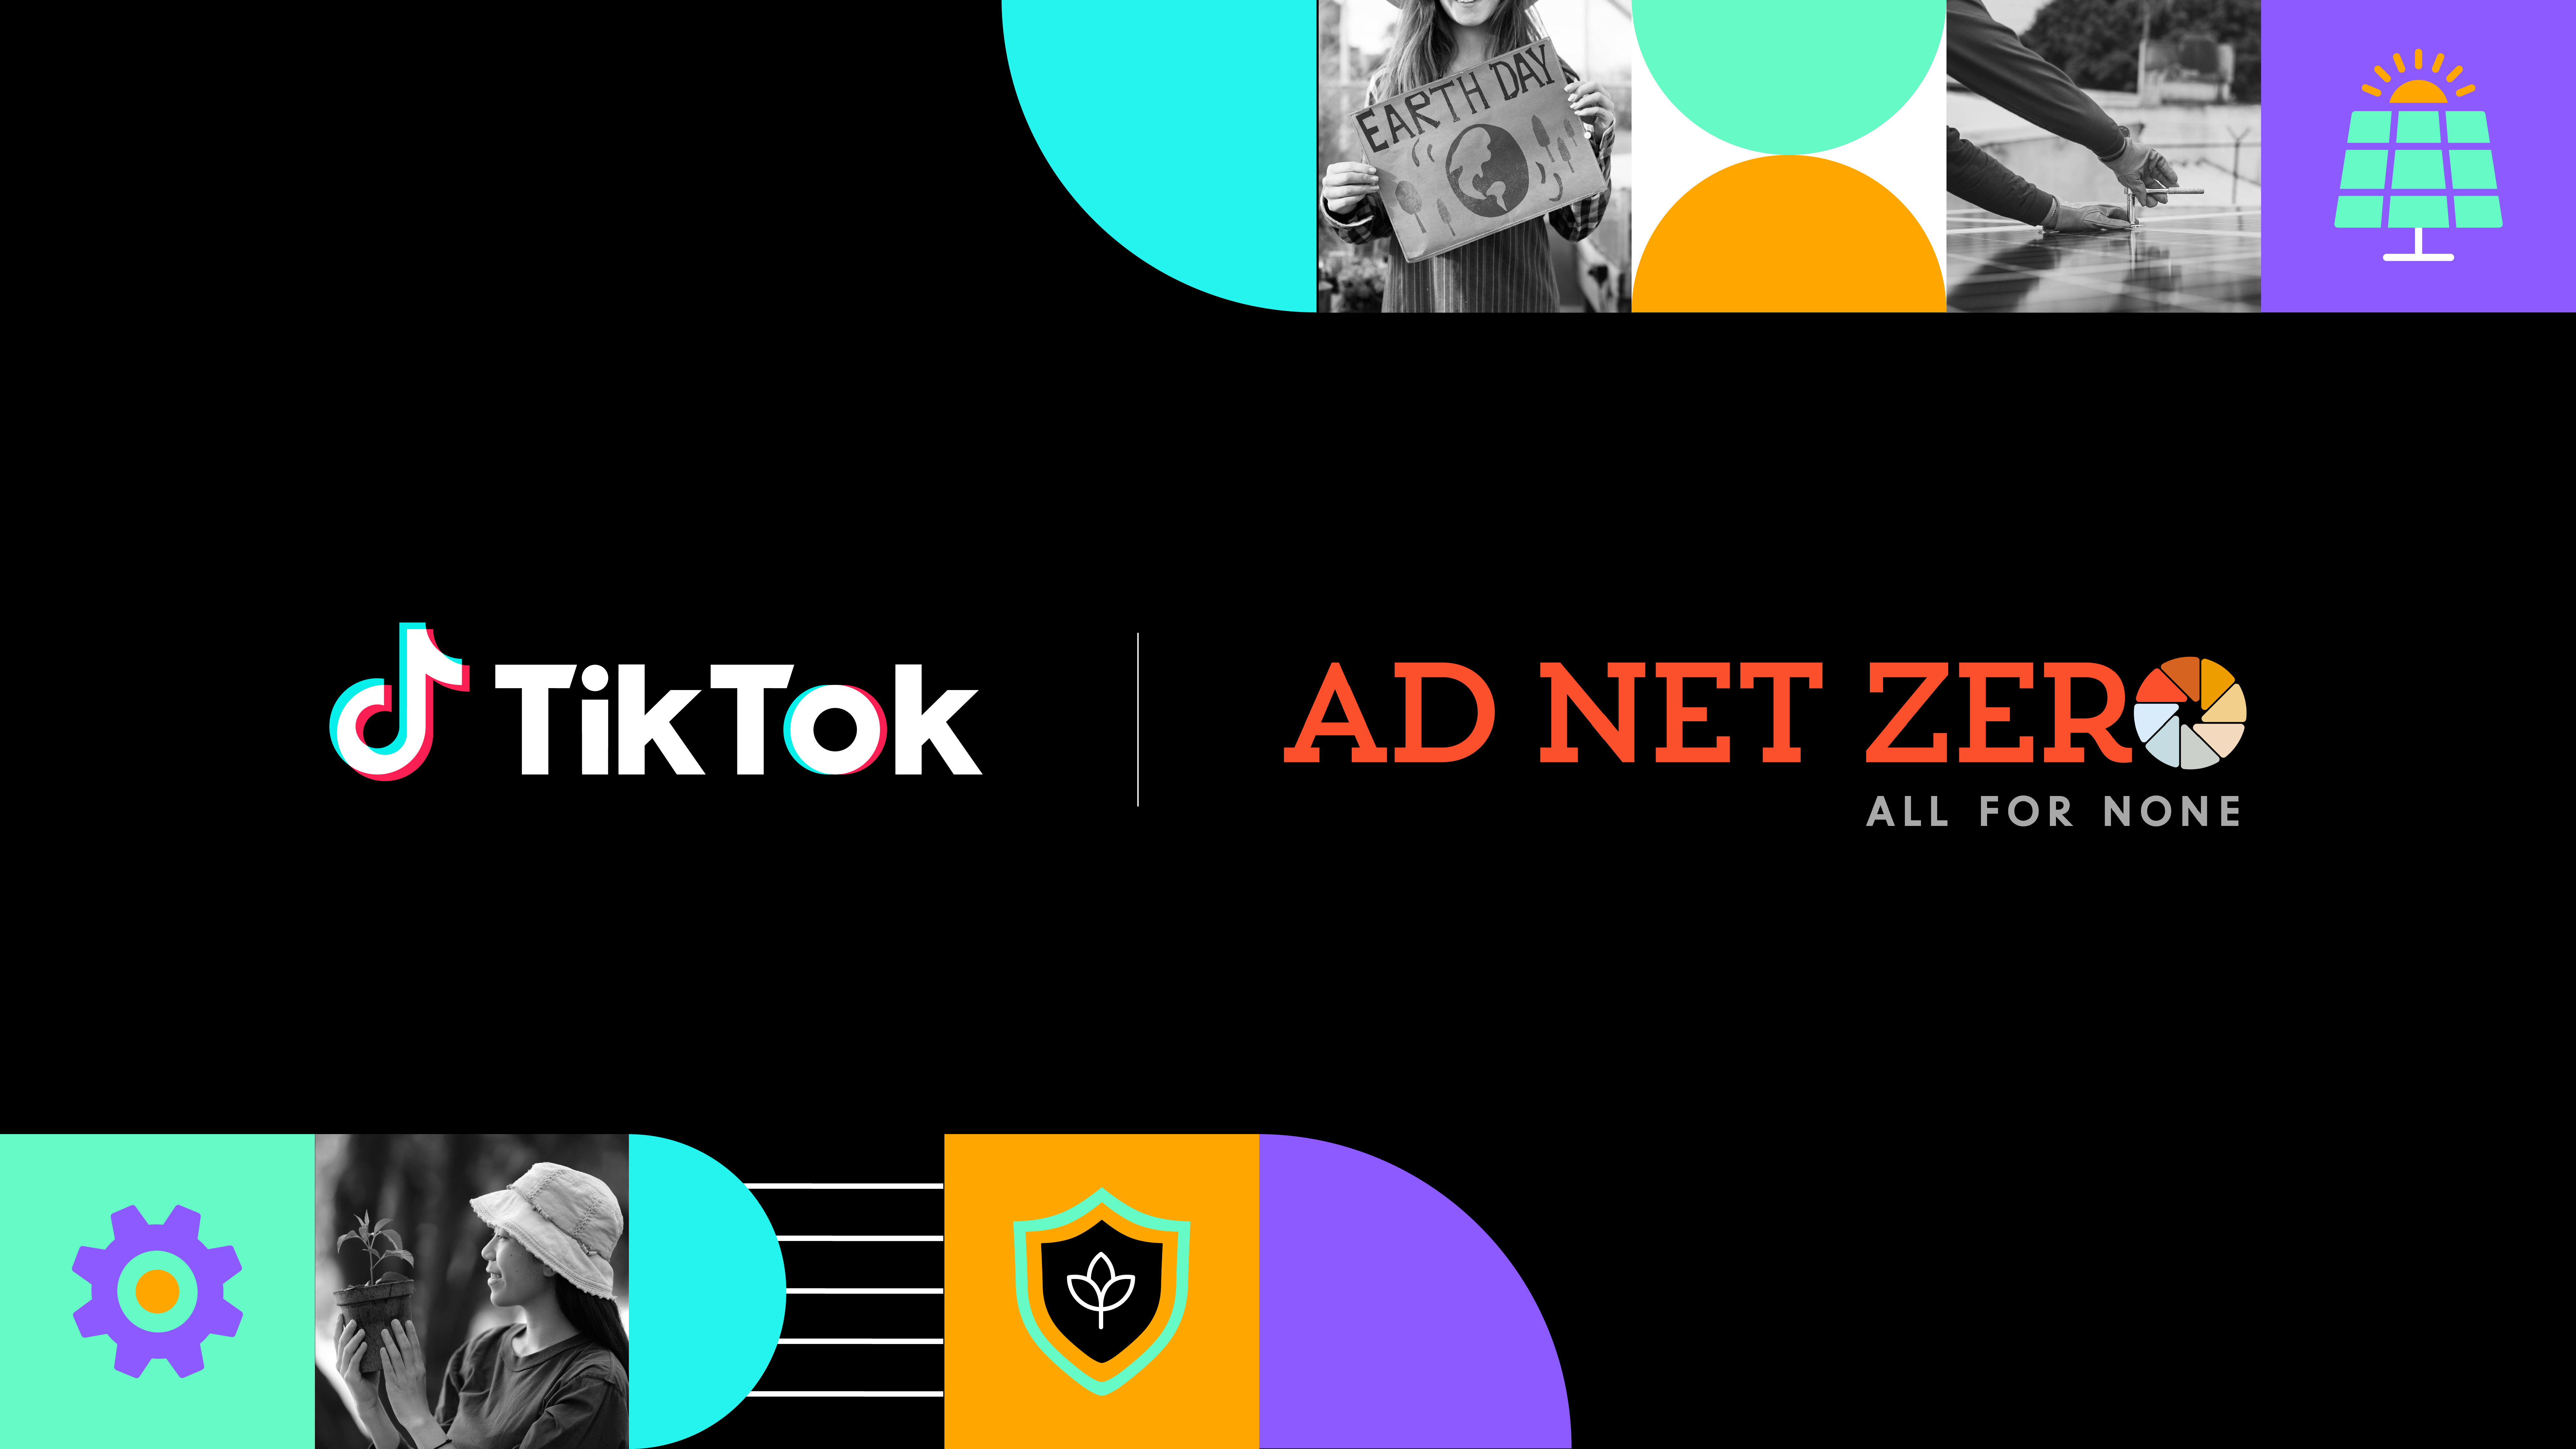 TikTok joins Ad Net Zero